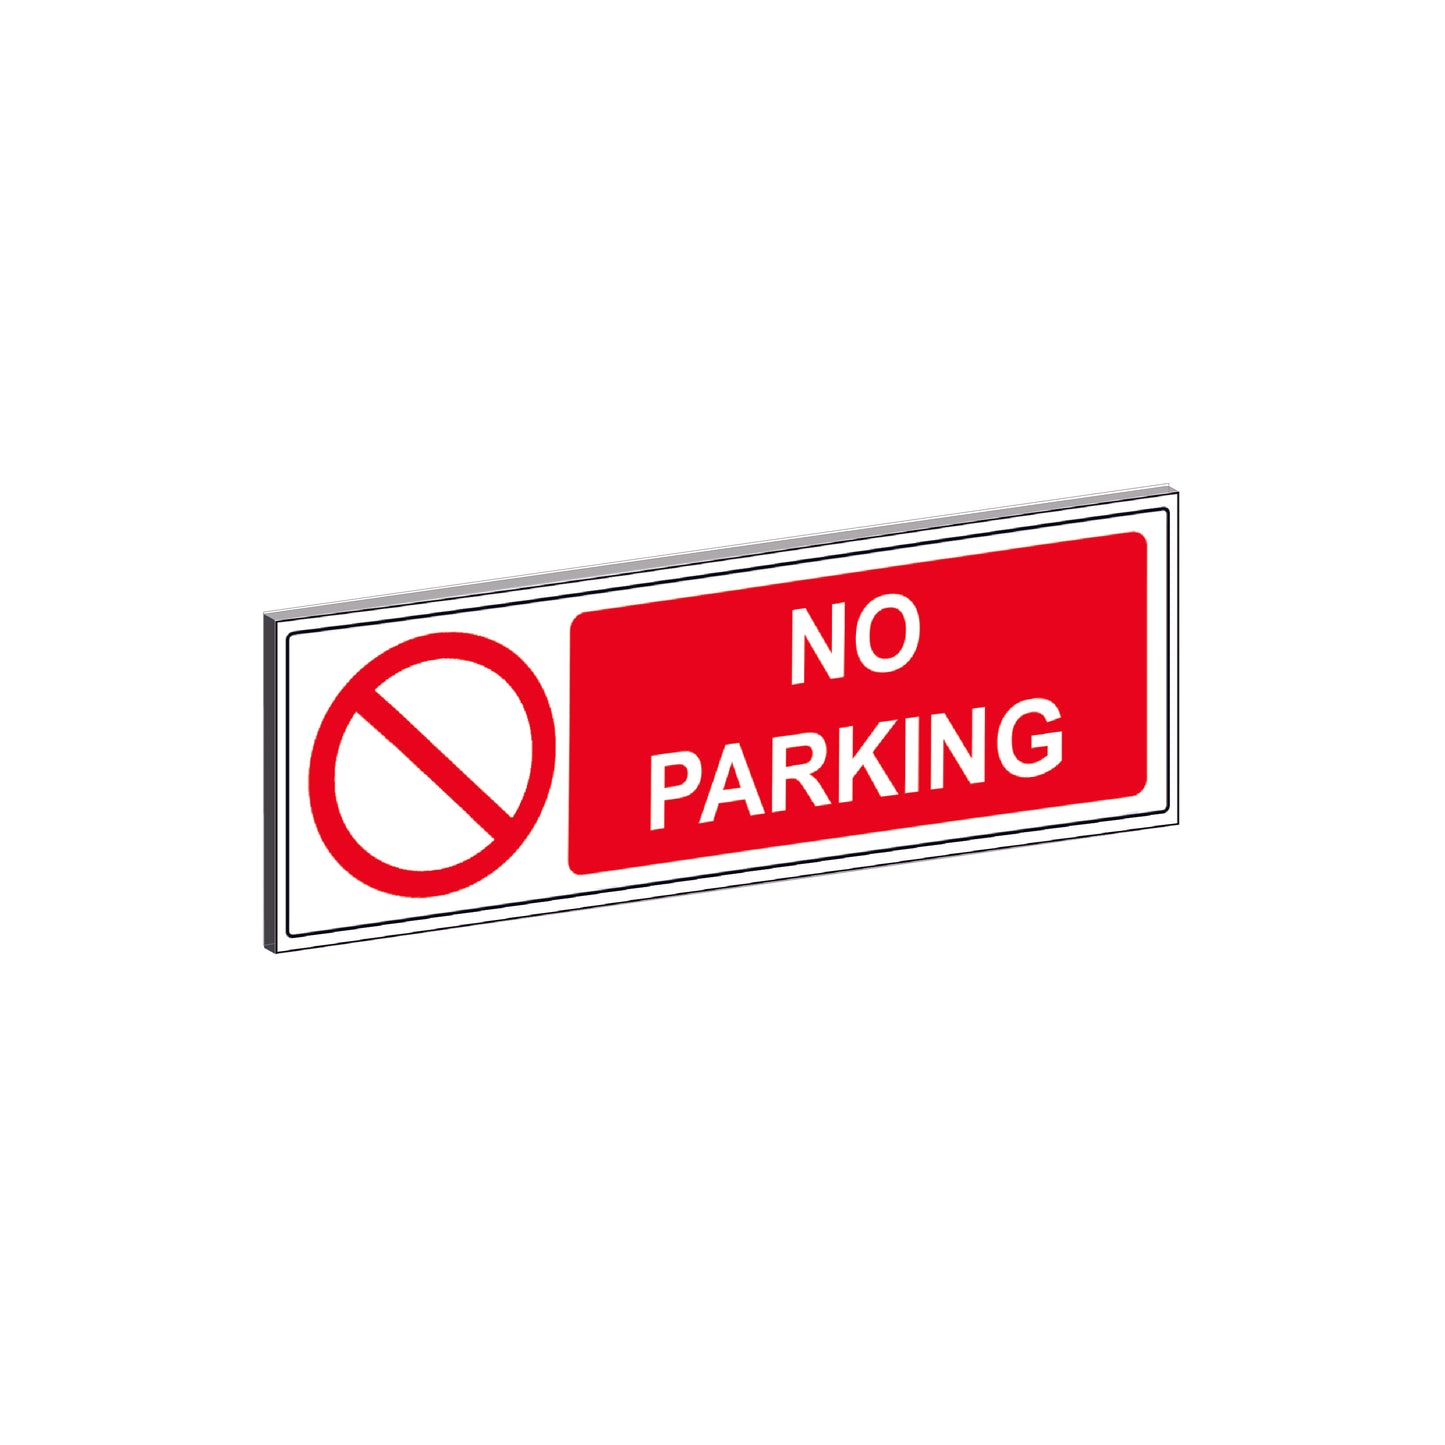 No Parking WARNING SAFETY 3mm SIGN for Doors Walls Windows Gates Garage